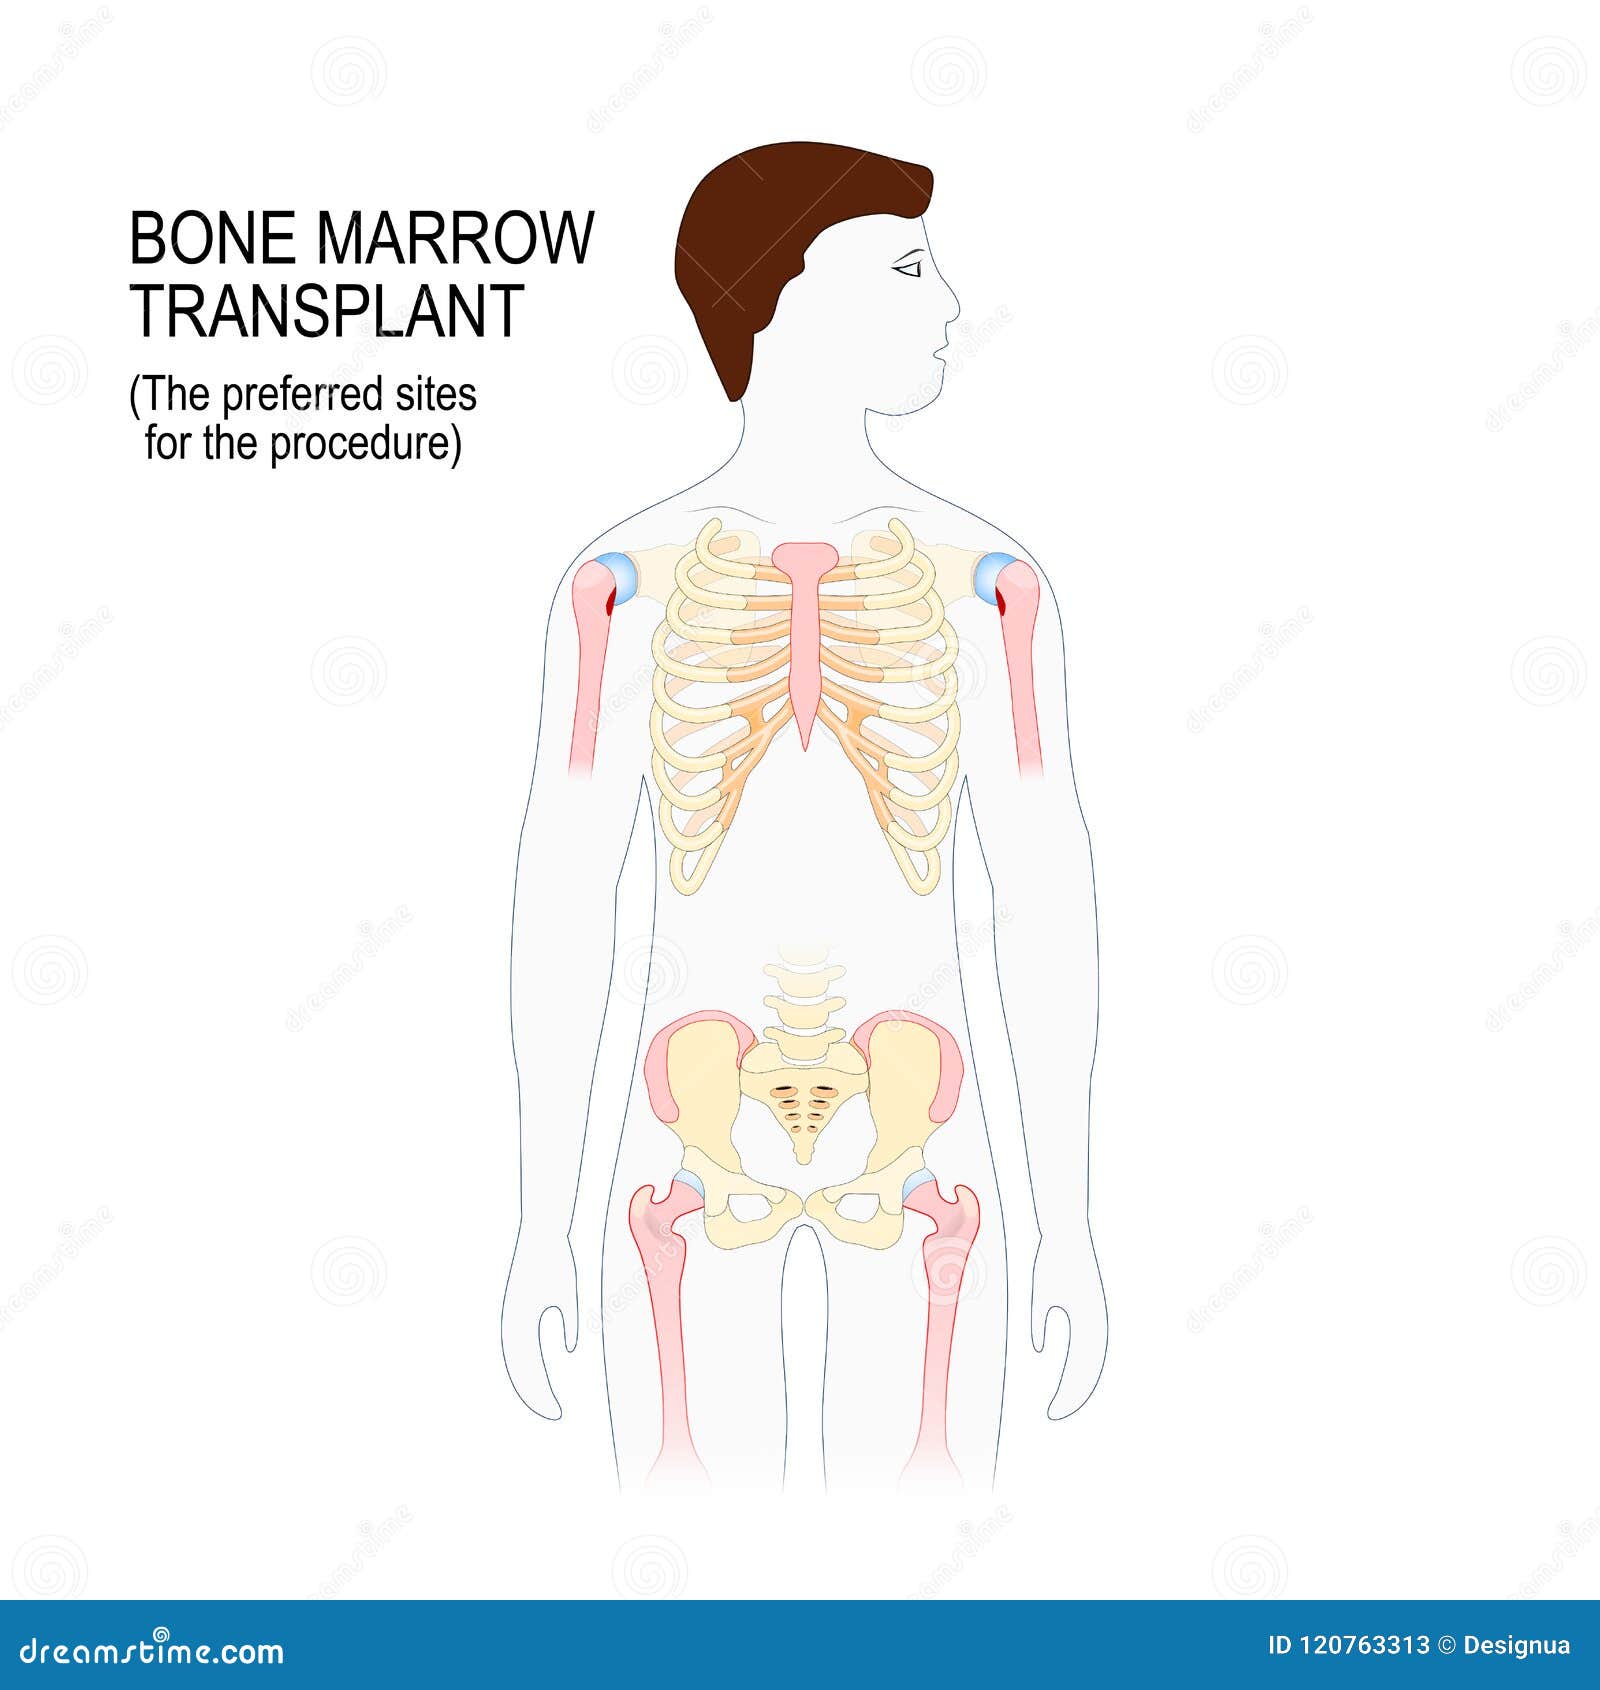 bone marrow transplant. the preferred sites for the transplantation procedure